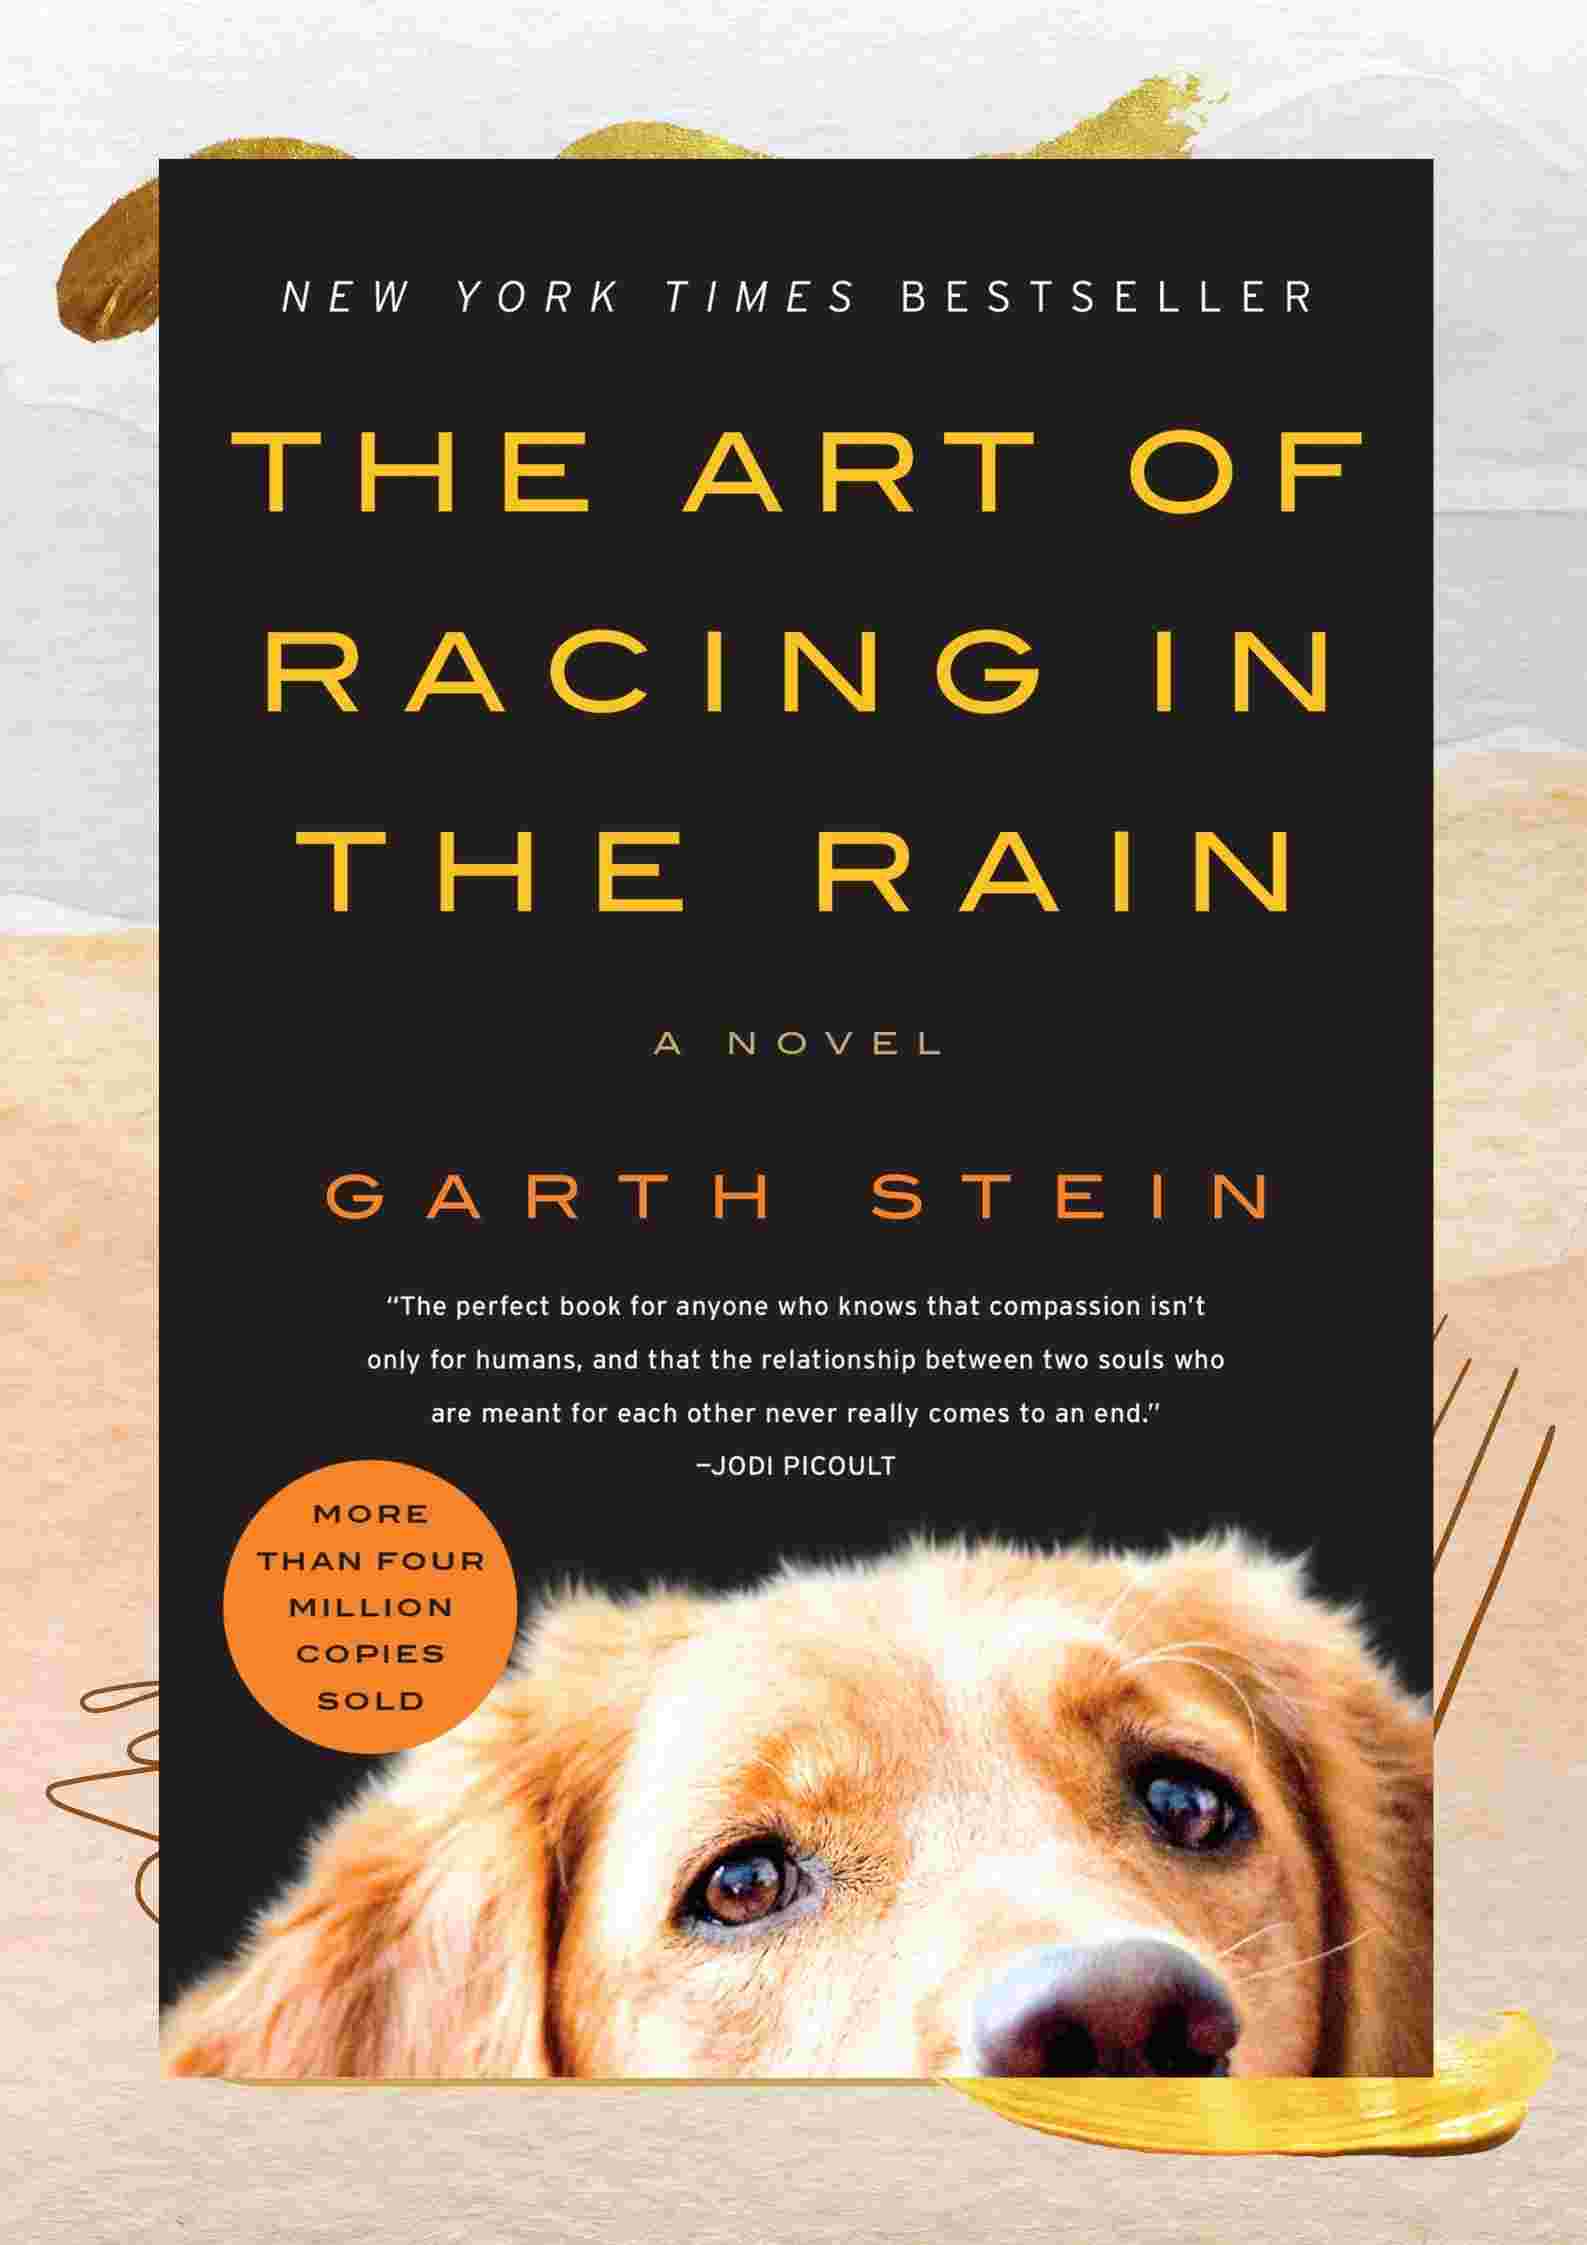 The art of racing in the rain book summary